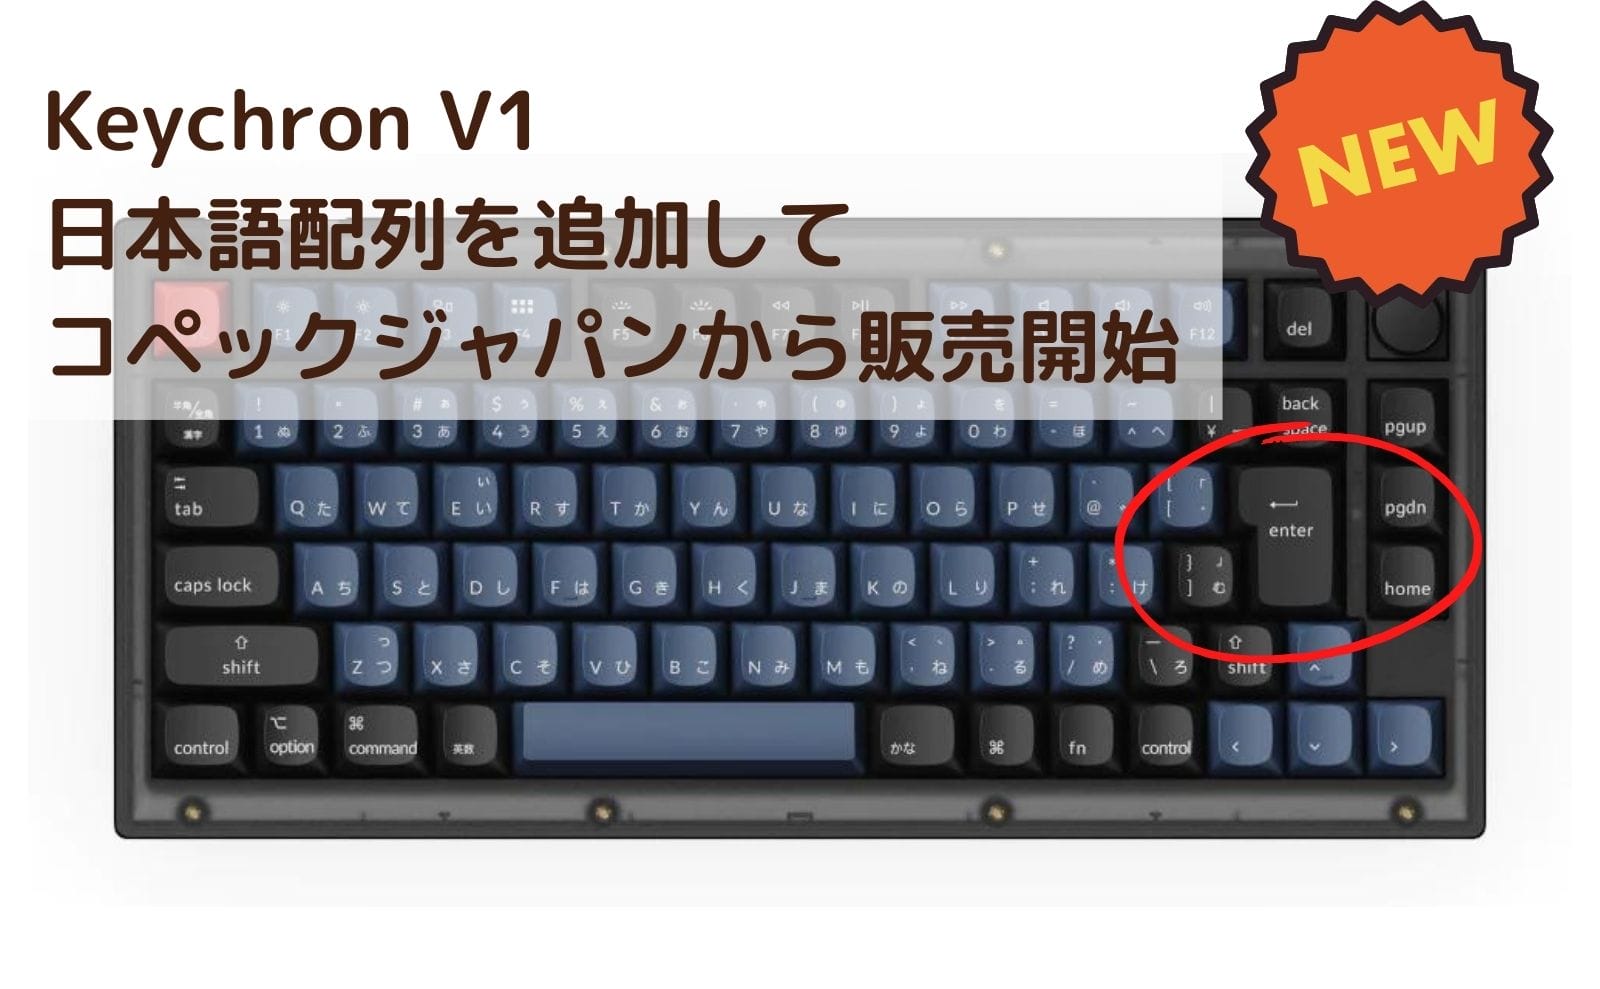 Keychron V1 US/JIS (alphanumeric/Japanese) layout is now available